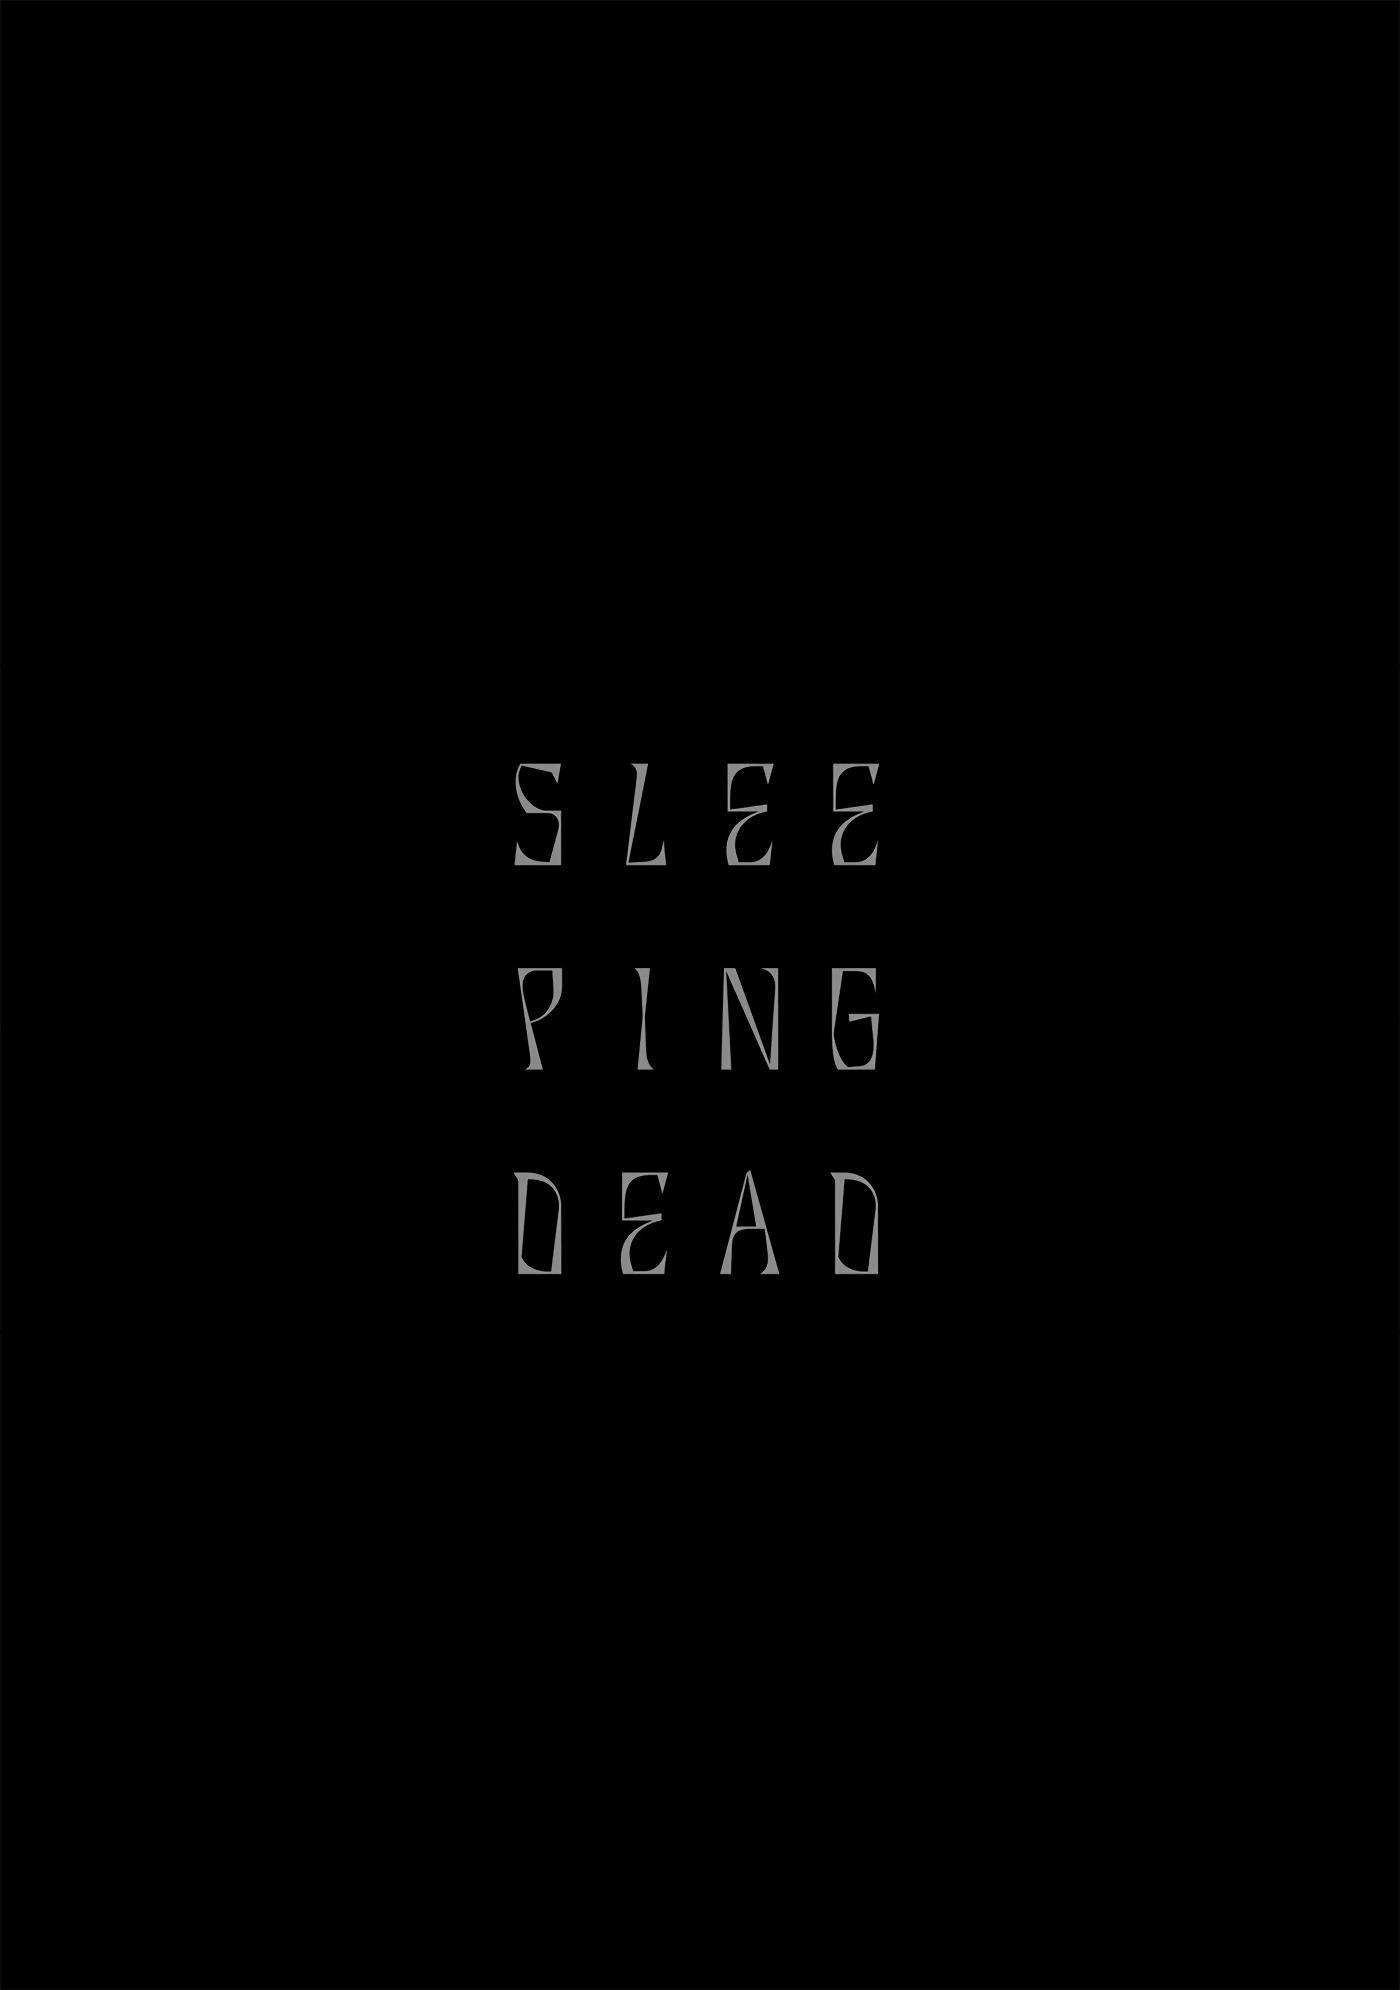 Sleeping Dead - Page 2